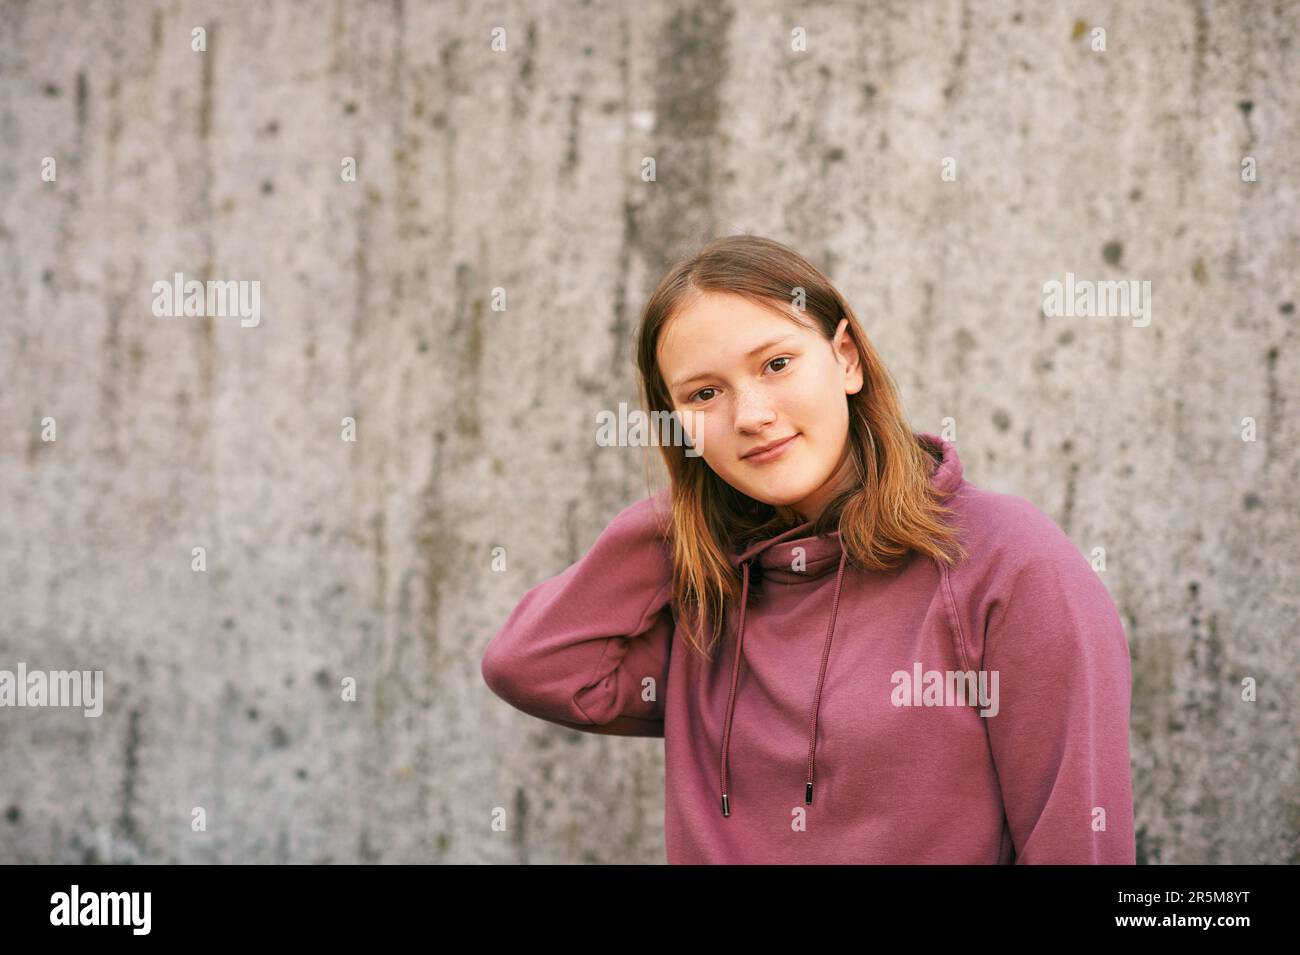 Outdoor urban portrait of young teen girl posing against grey wall, wearing pink sweatshirt Stock Photo